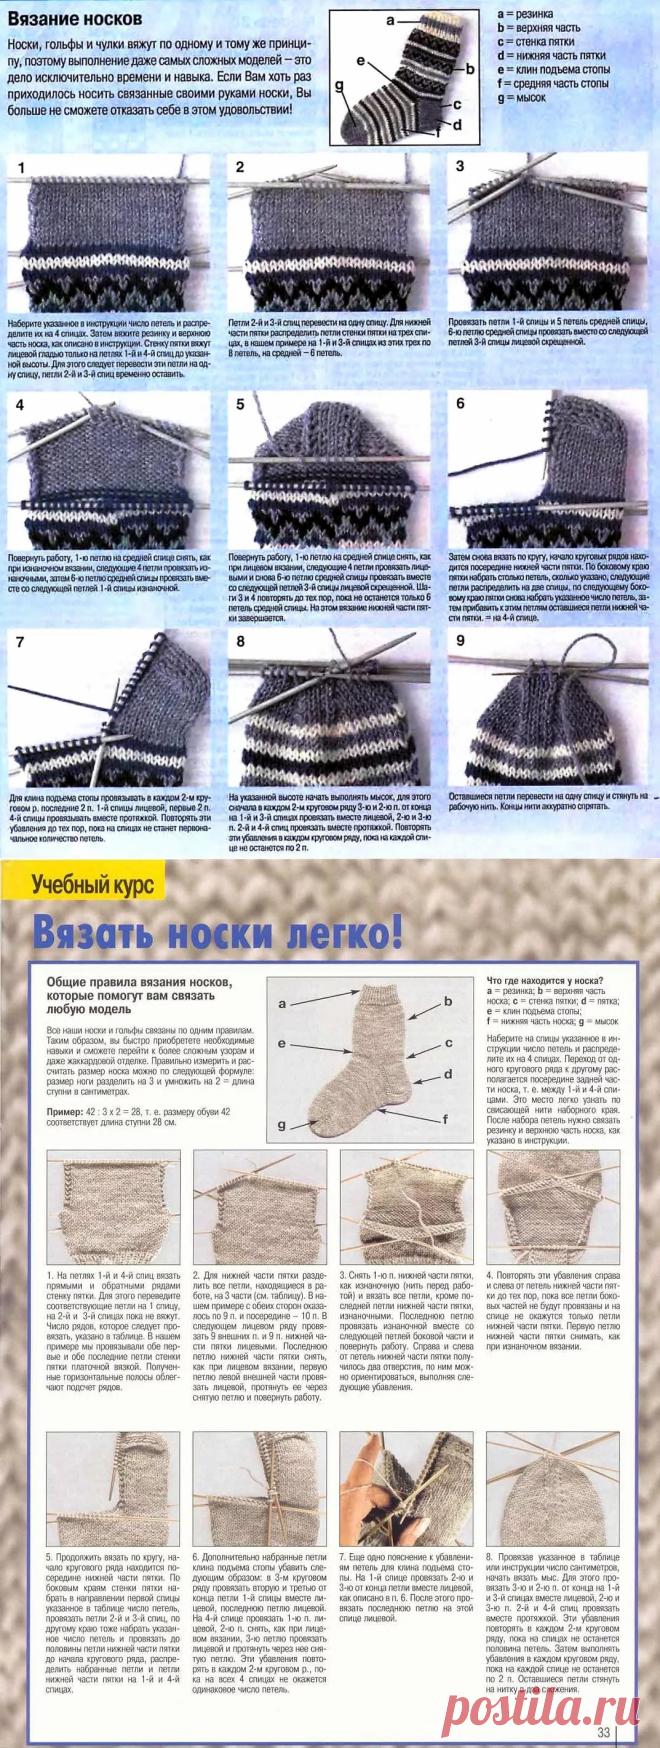 Вязание спицами носков на 5 спицах